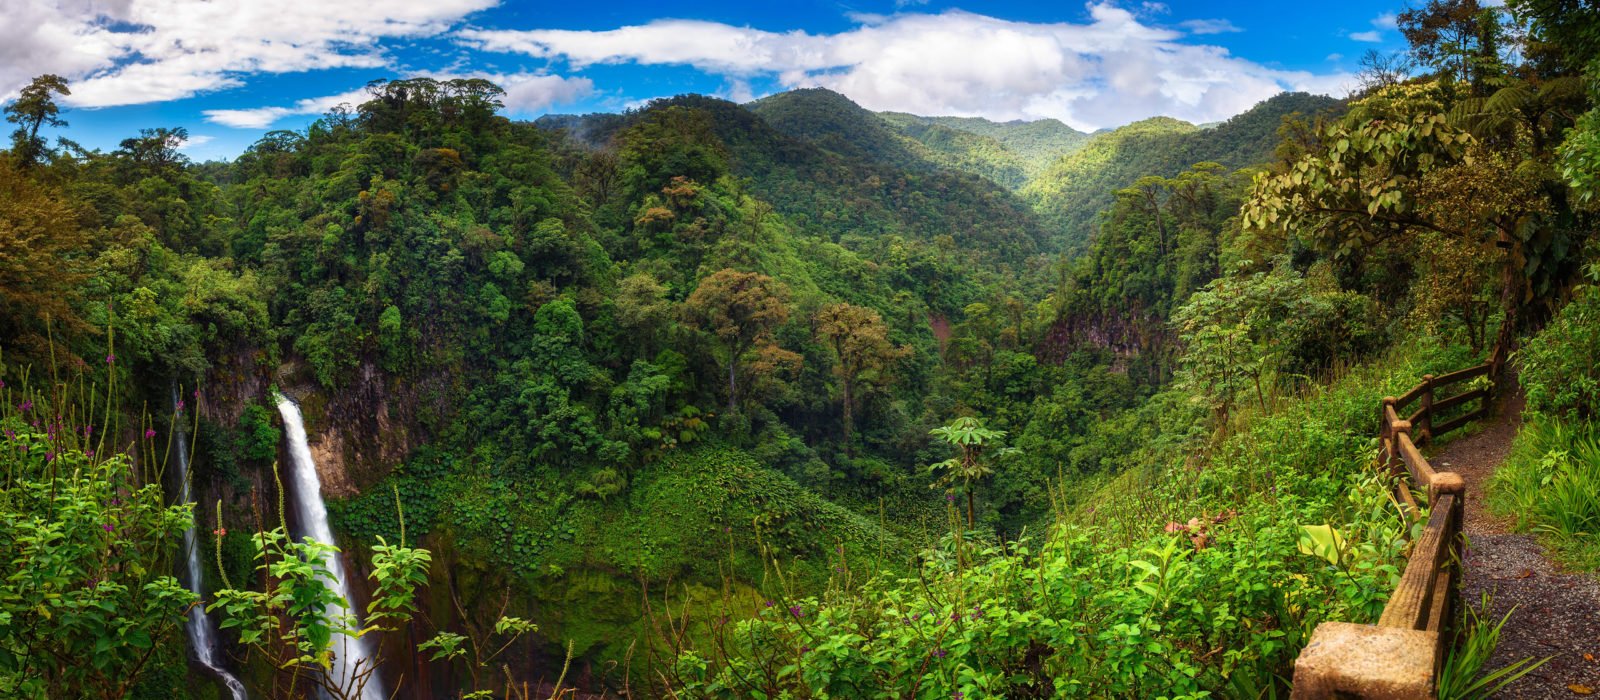 Panorama of the Catarata del Toro waterfall in Costa Rica with surrounding mountains